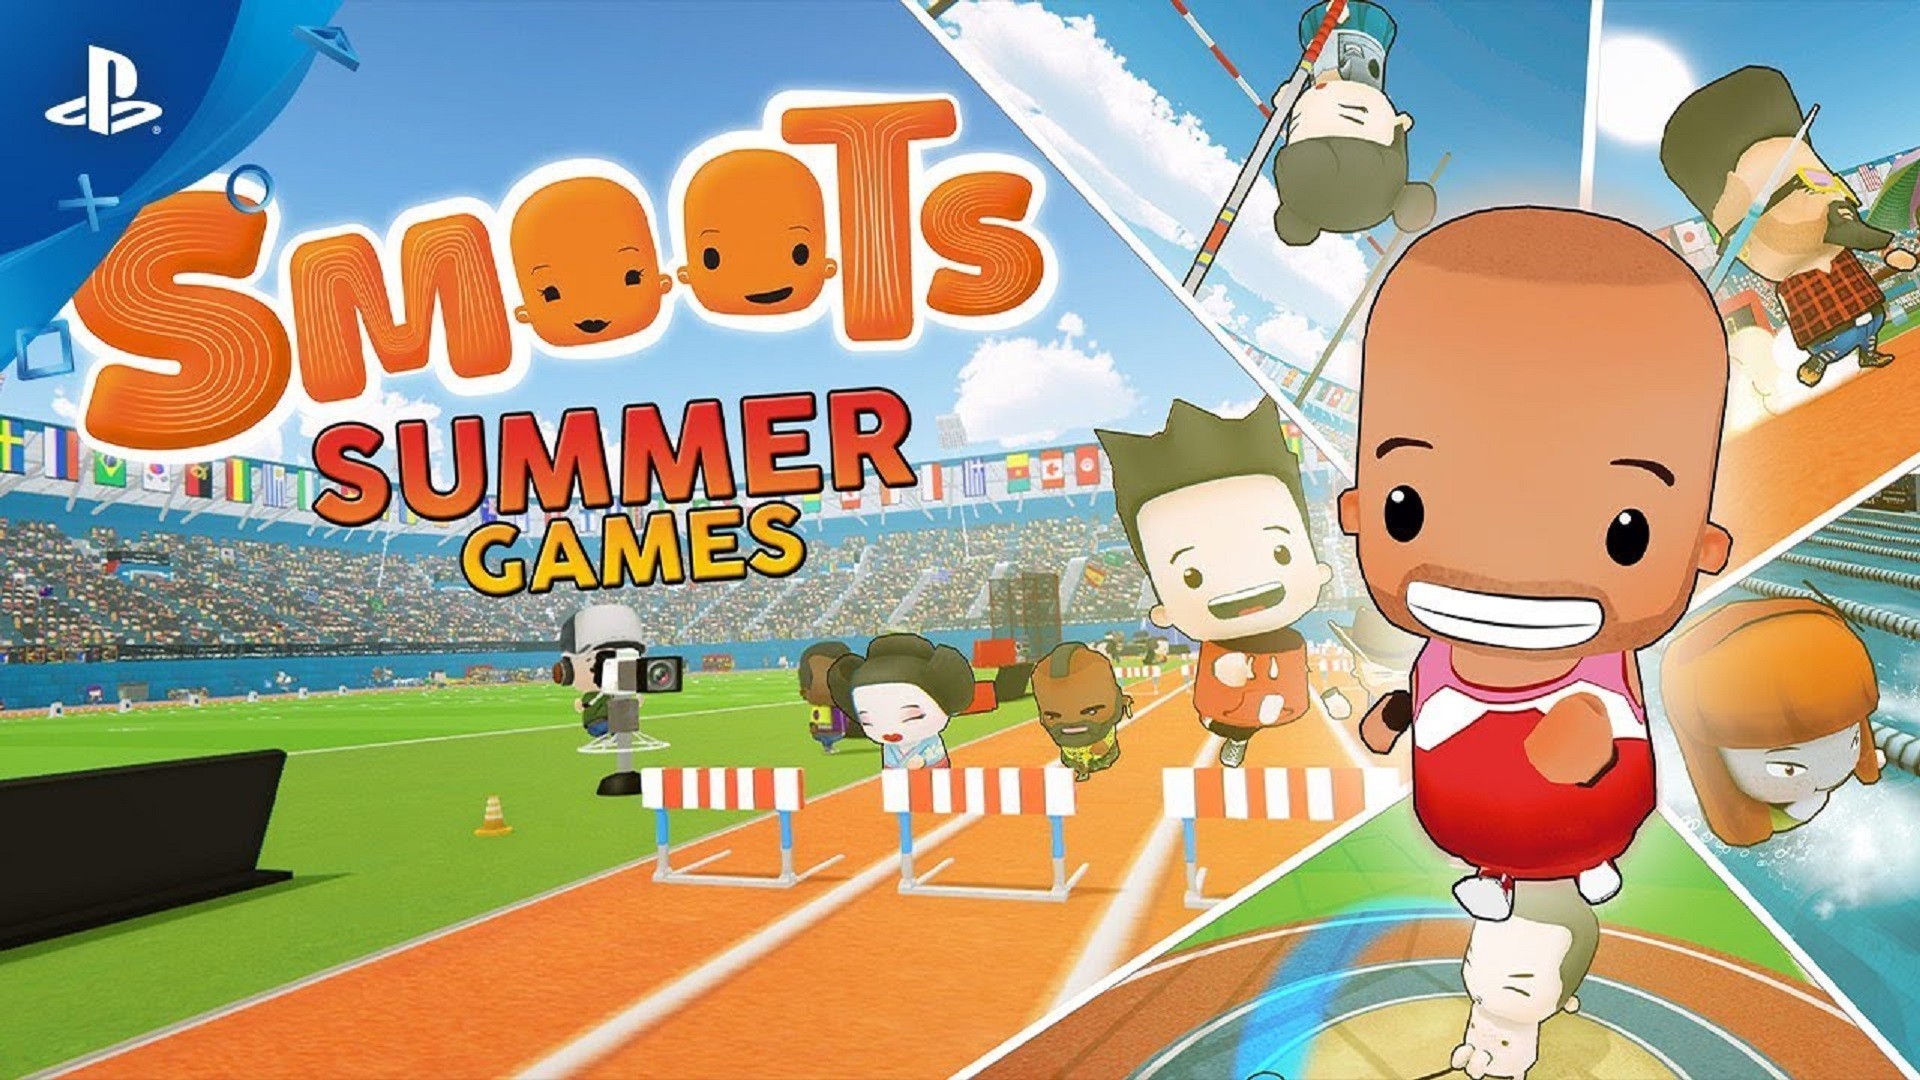 Player first games. Smoots Summer games. Summer игра. A different Summer игра. Summer Heat игра.